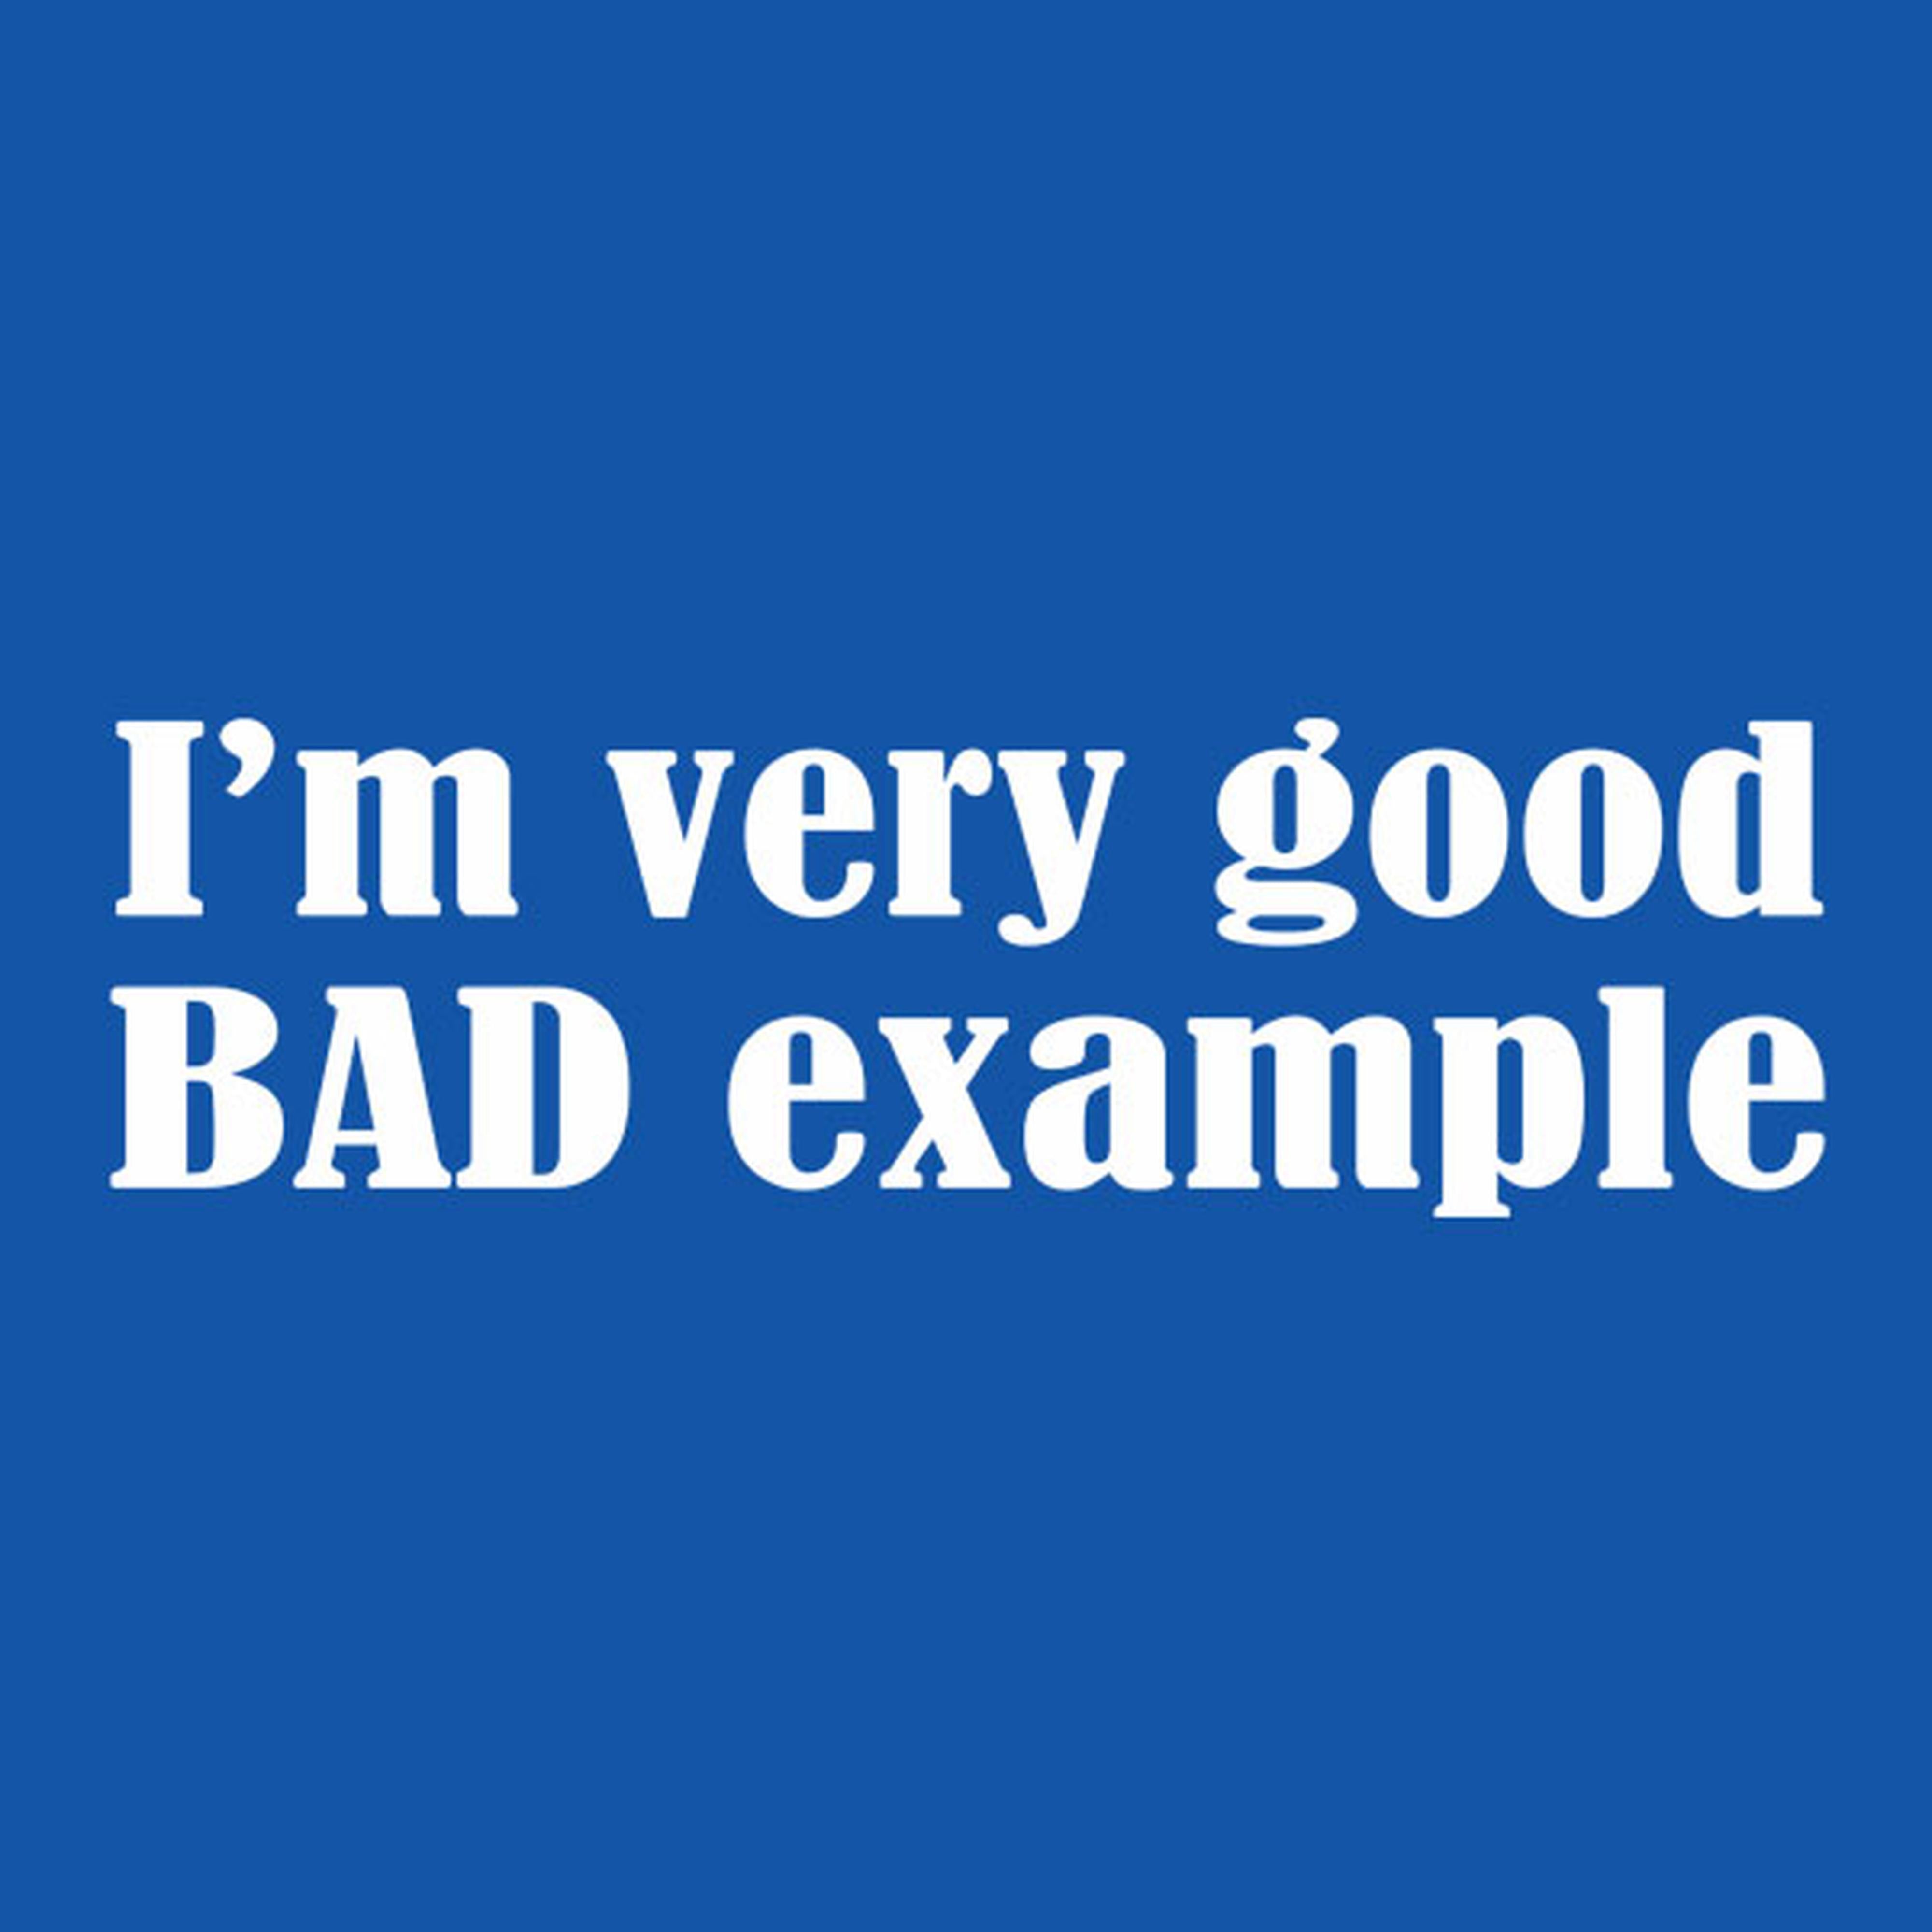 I am very good bad example - T-shirt